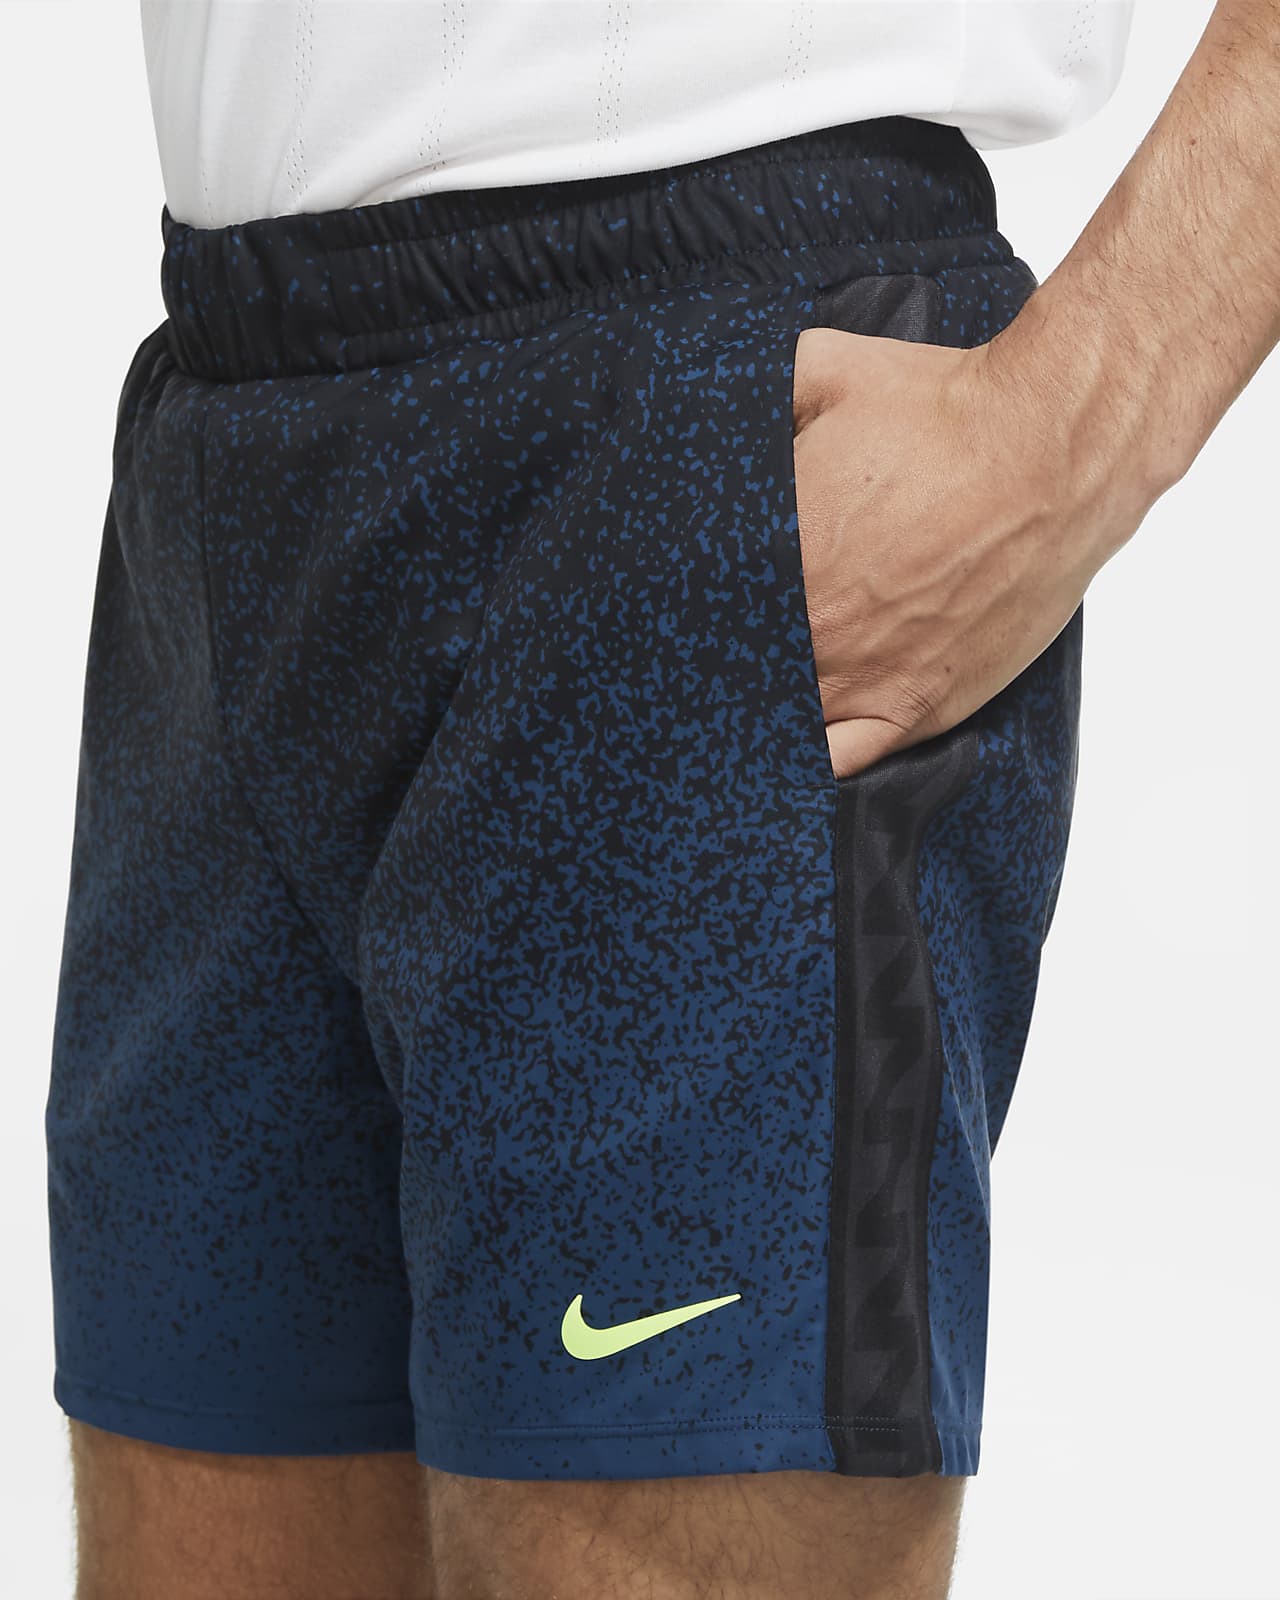 nike tennis mens shorts